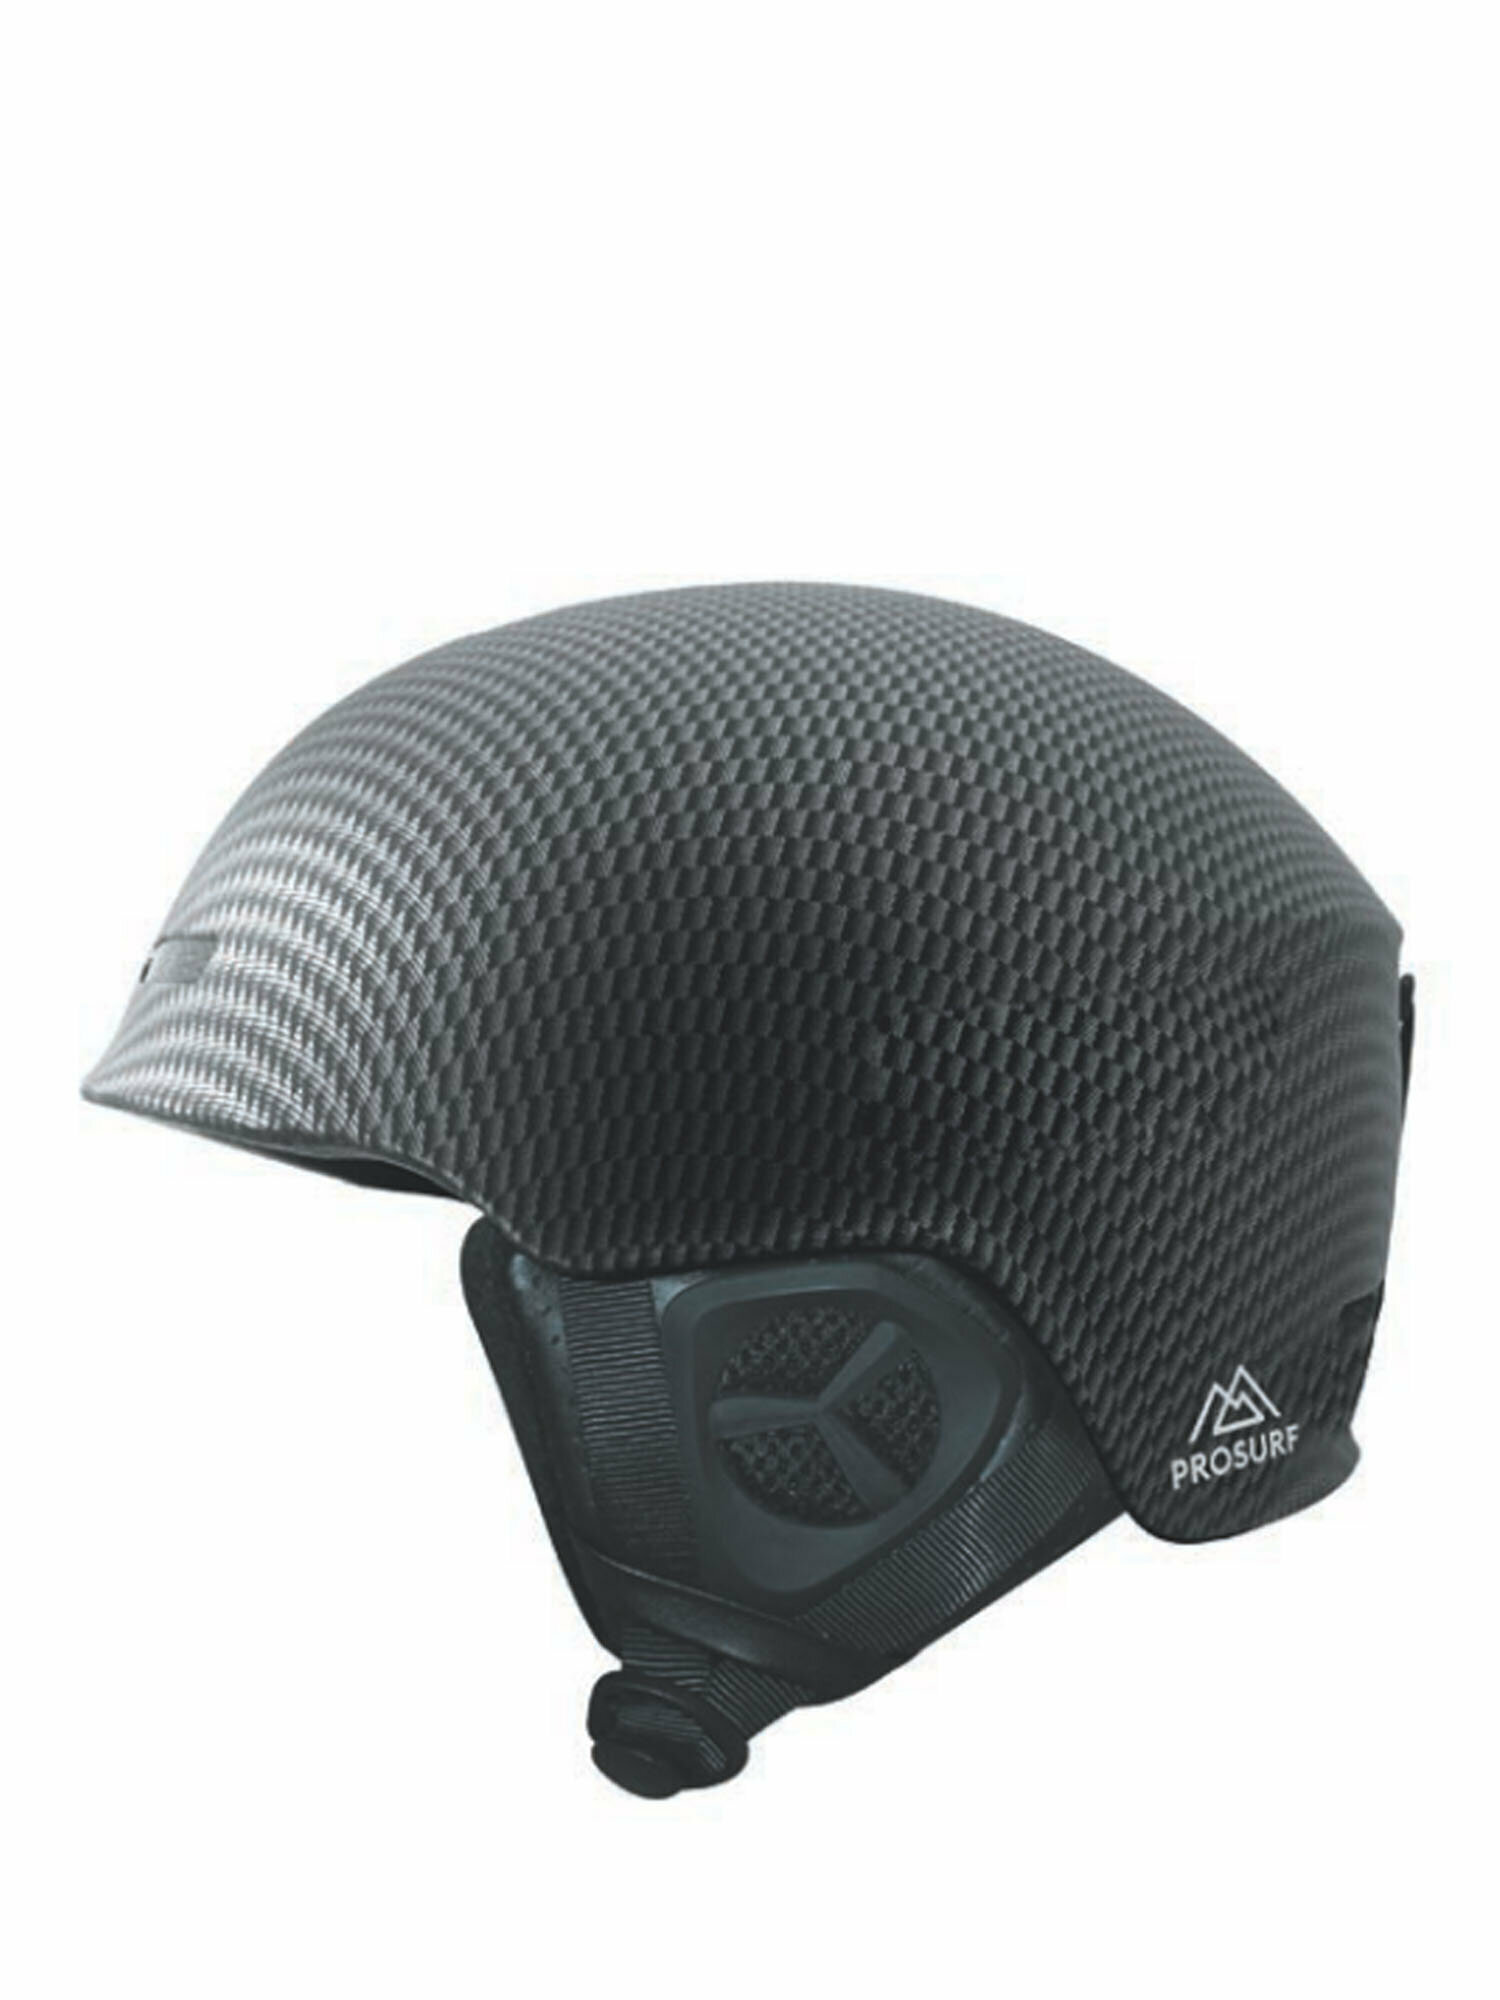 Шлем ProSurf Carbon Black (см:57-58)